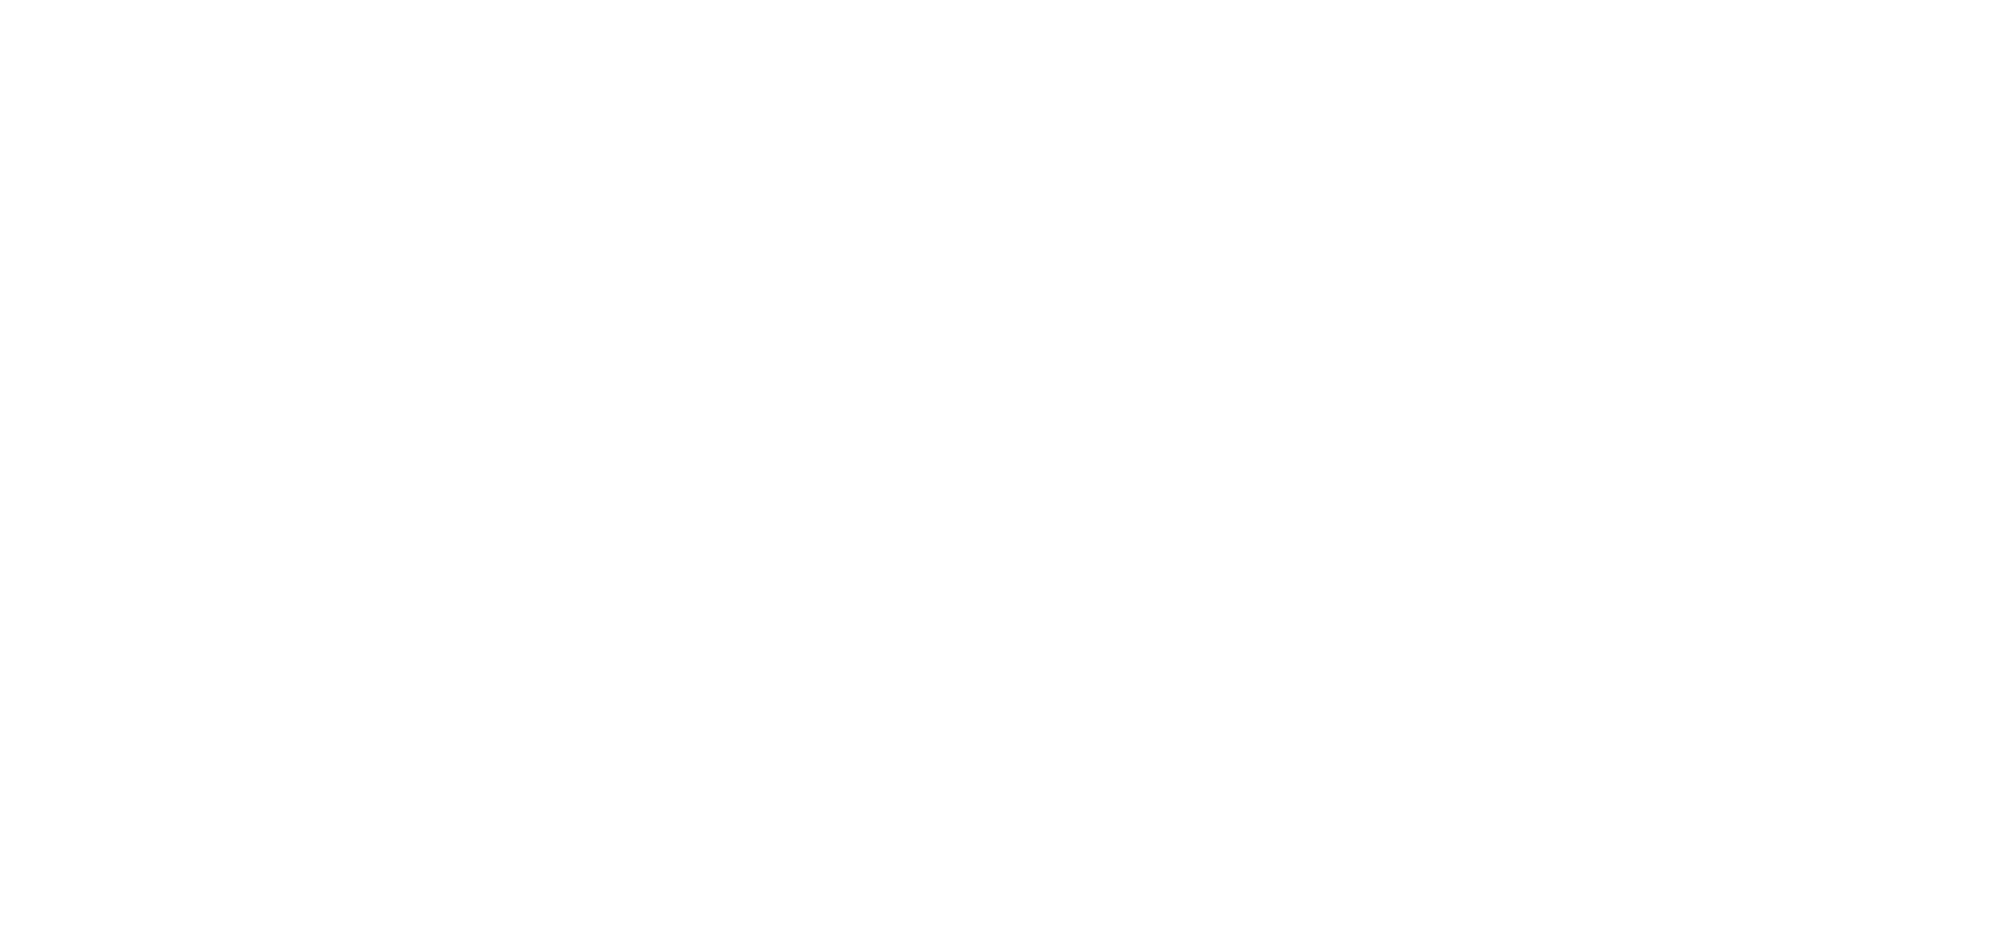 Nodeware logo